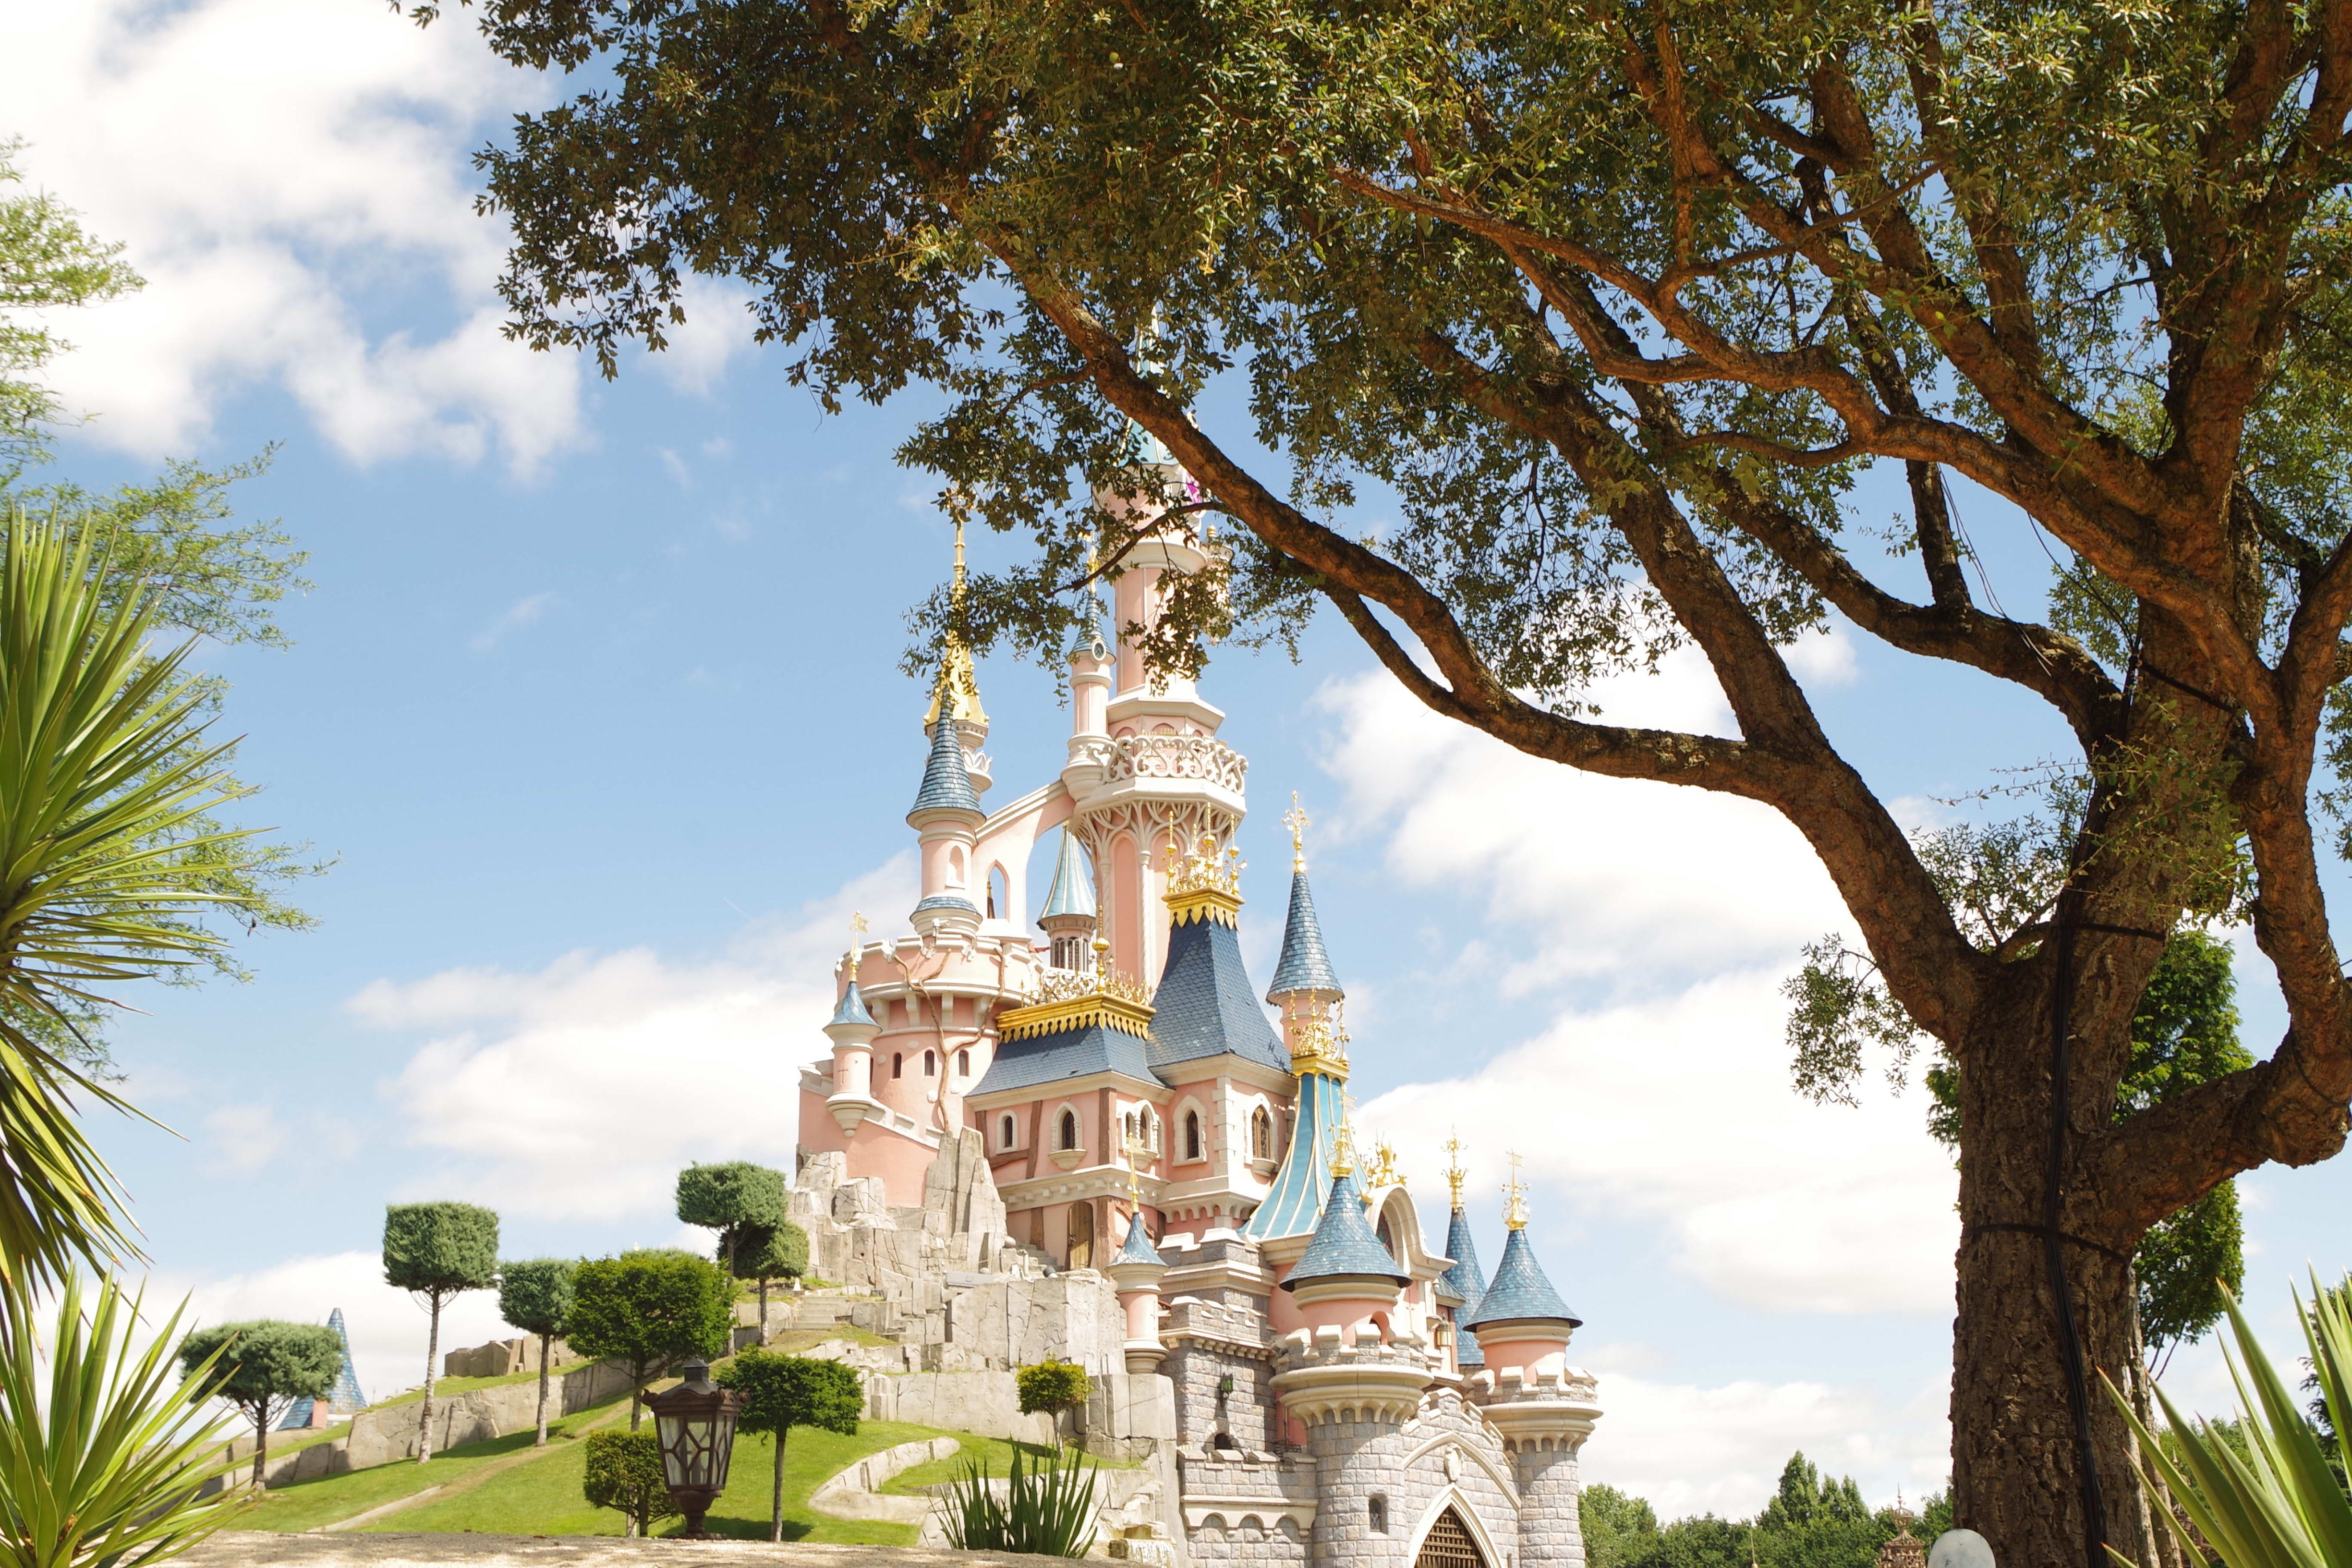 The Sleeping Beauty Castle at Disneyland Paris